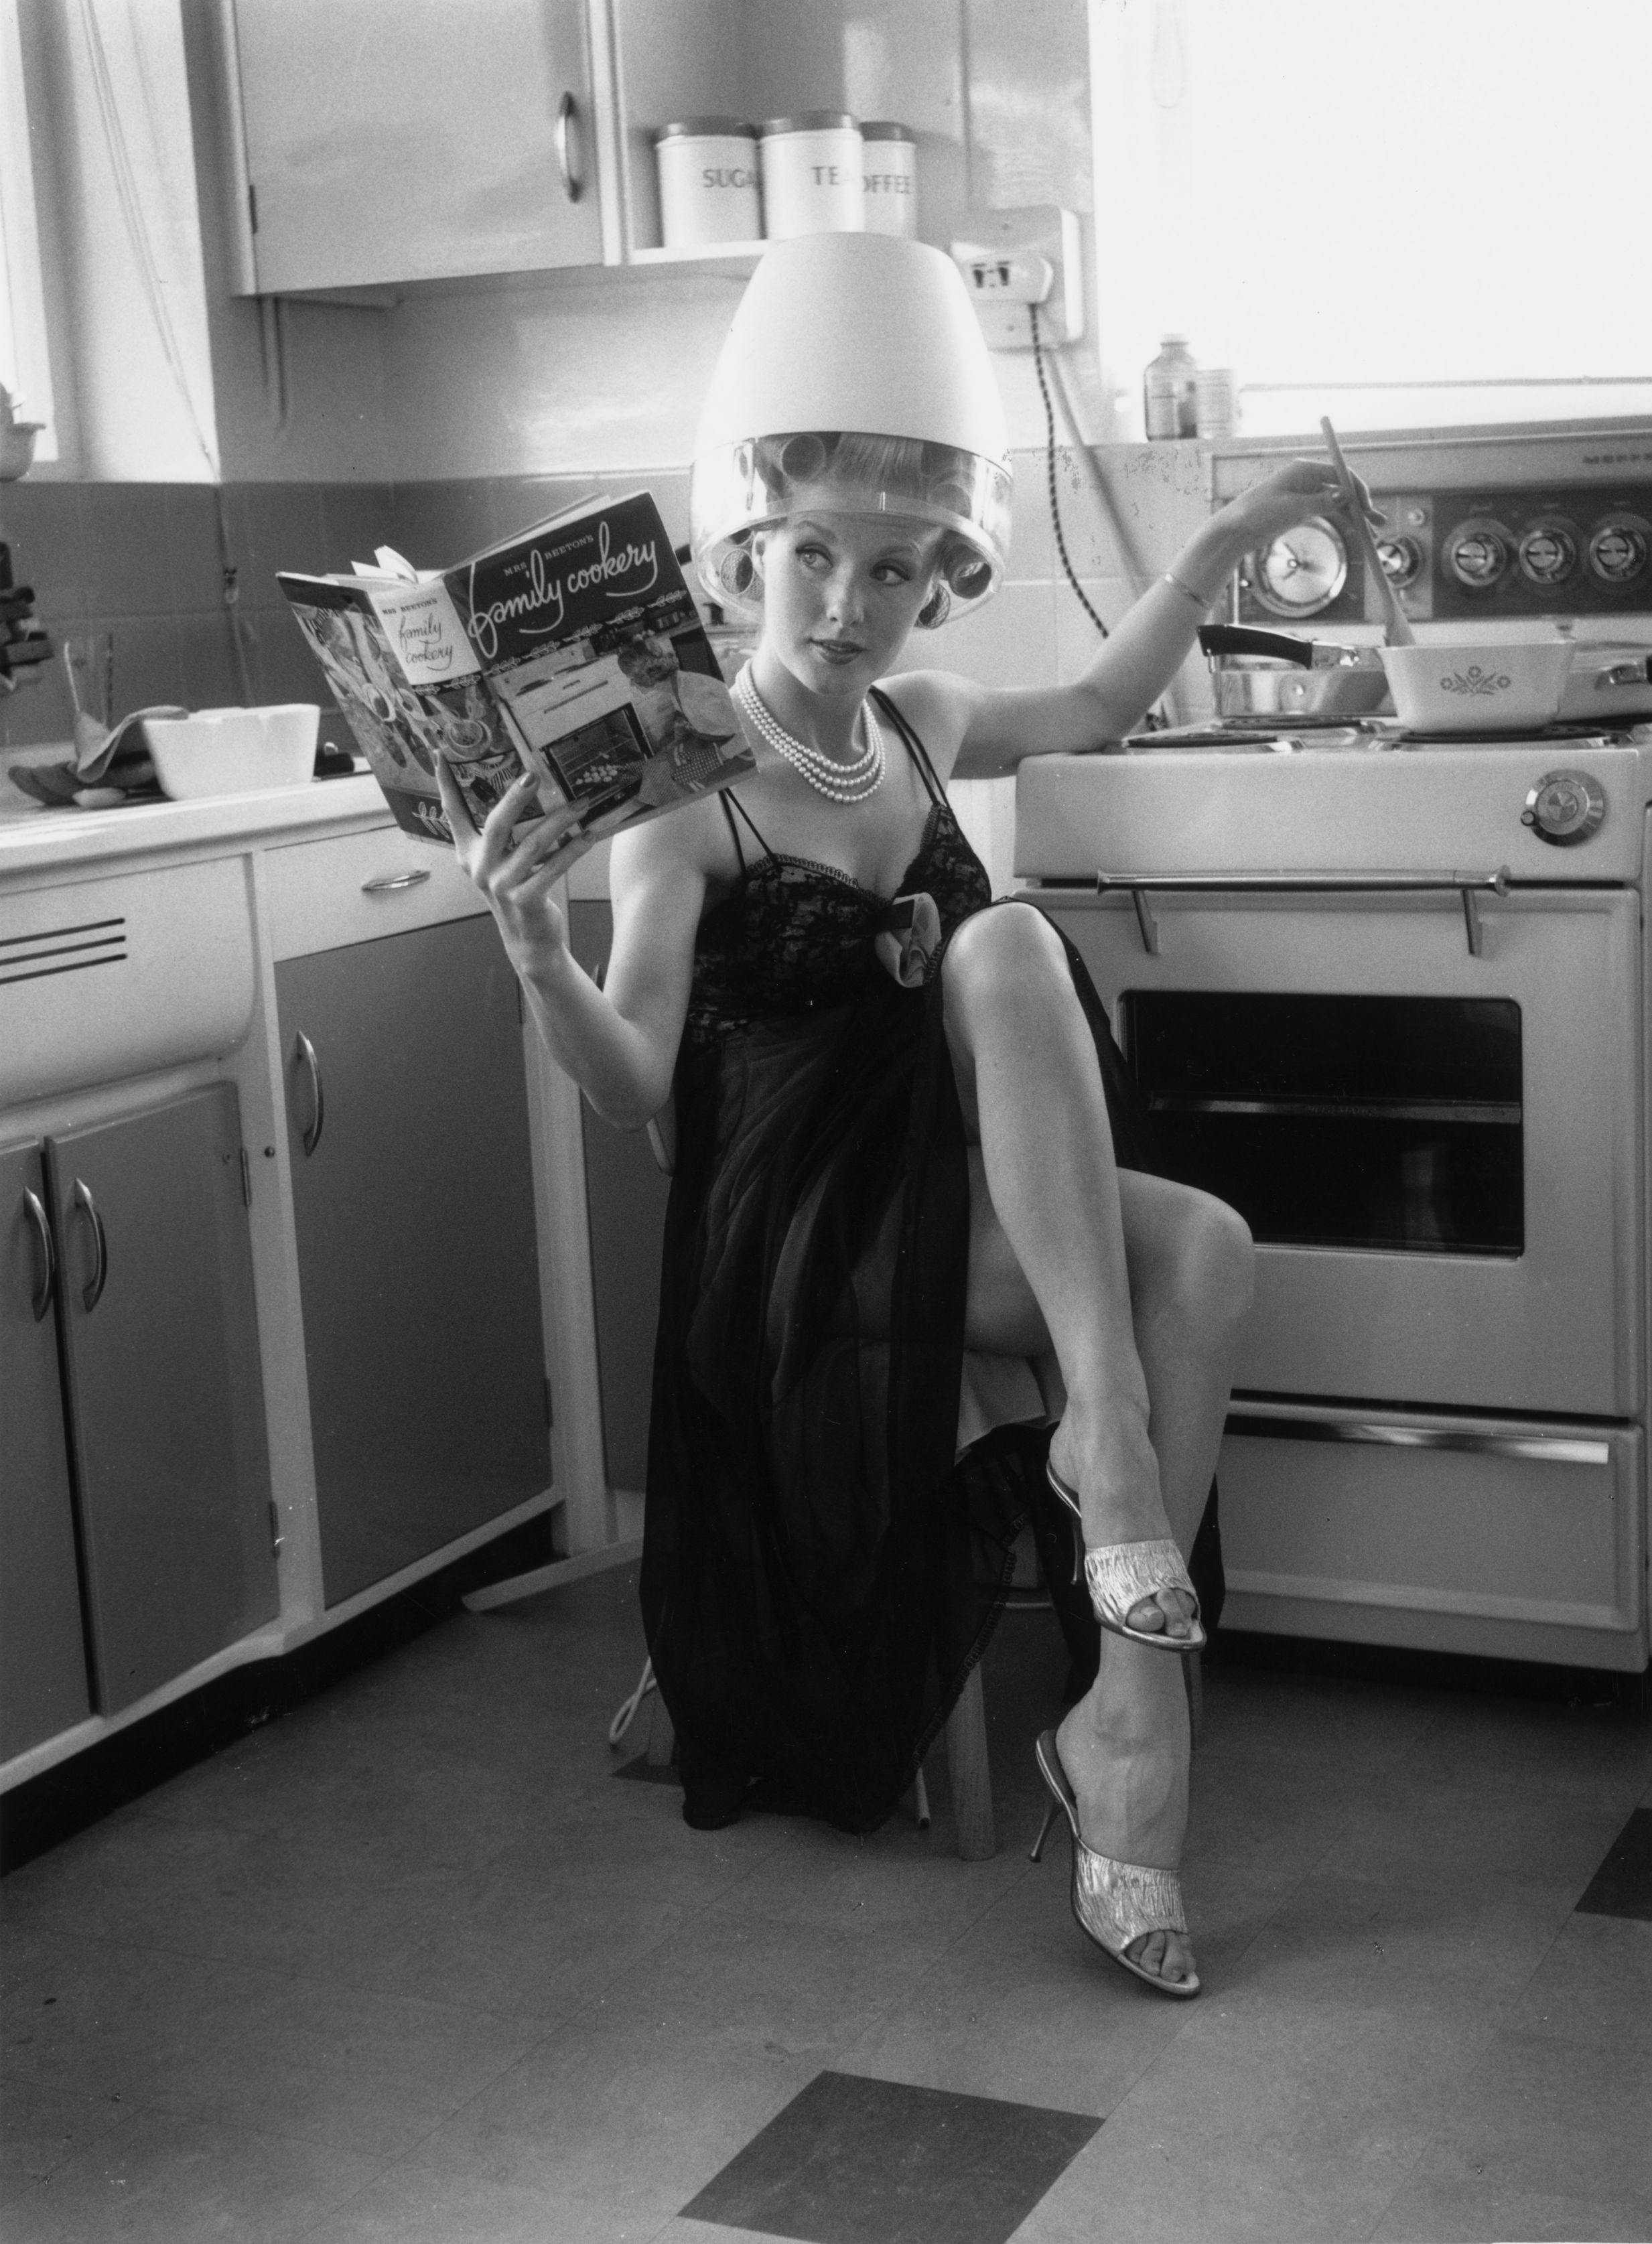 black & white;format portrait;female;hairdryer;domestic applianc helmet clothing person human room indoors oven appliance interior design female